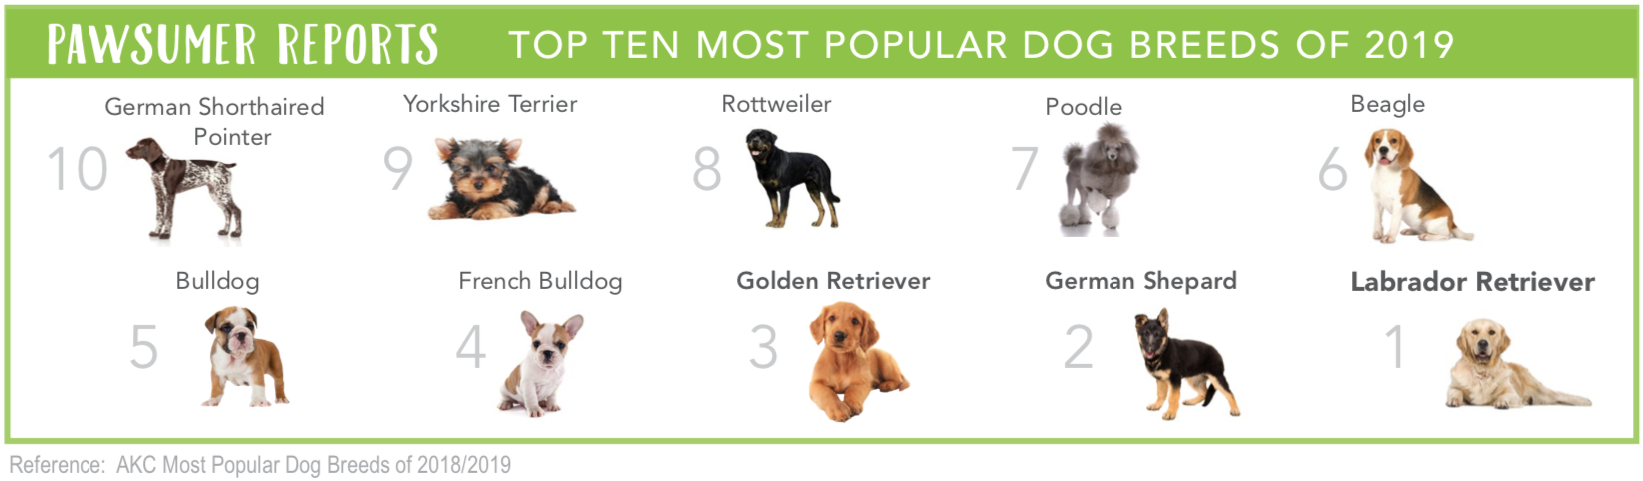 most popular dog breeds 2019